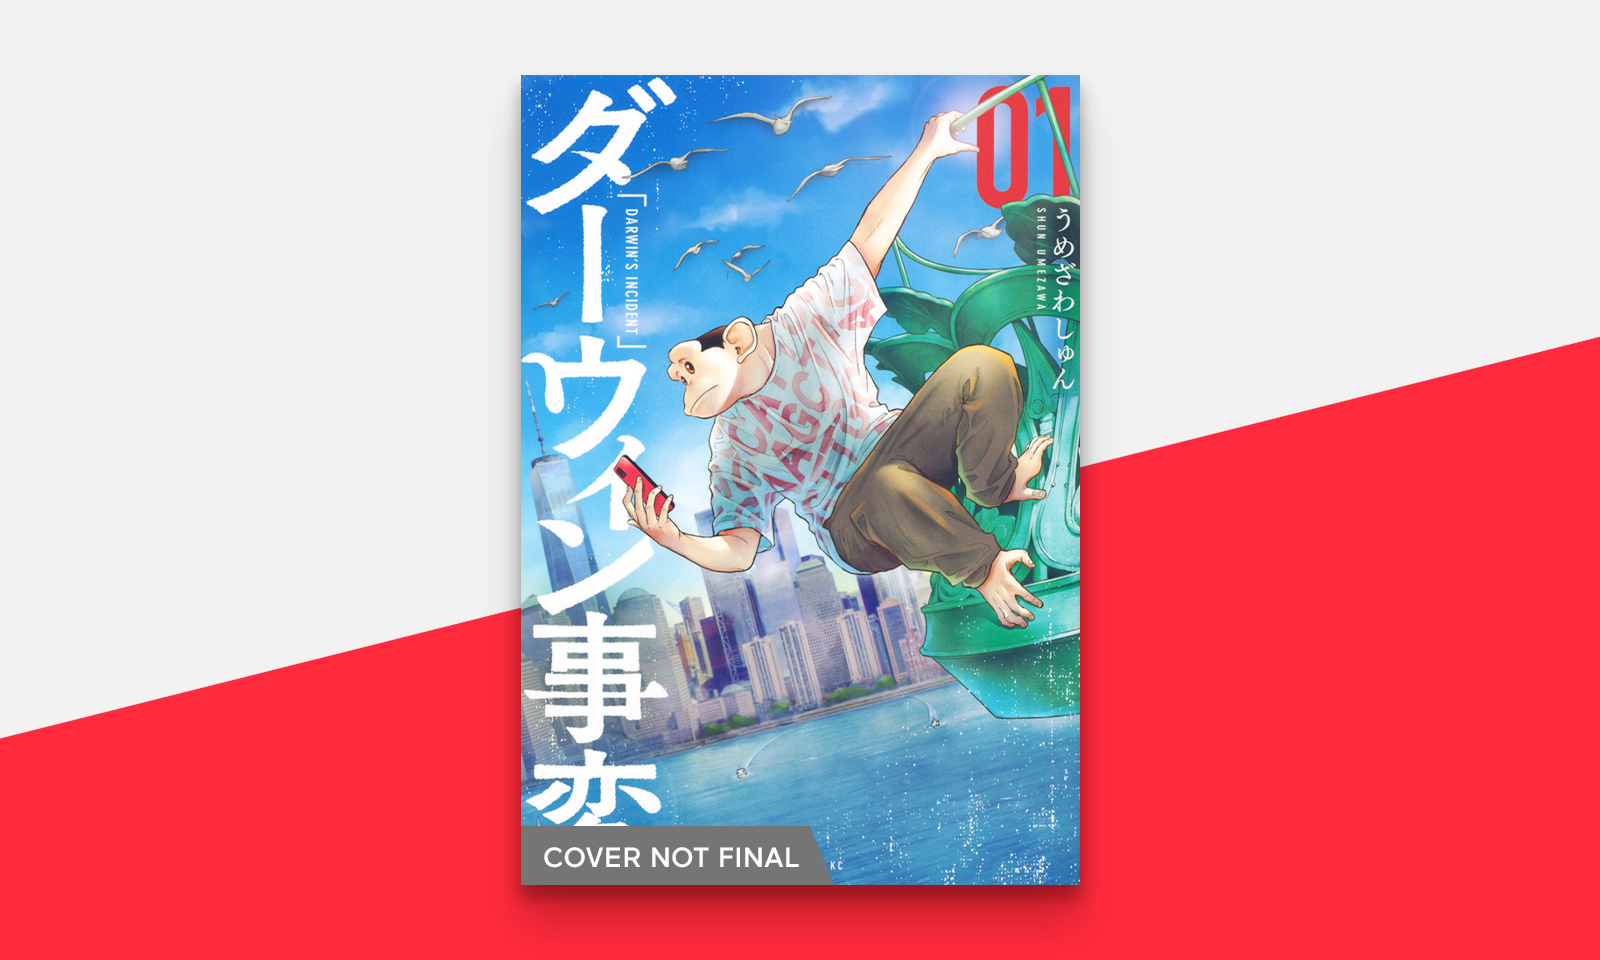 Anime Nyc Announcements From Kodansha Include Miraculous Manga